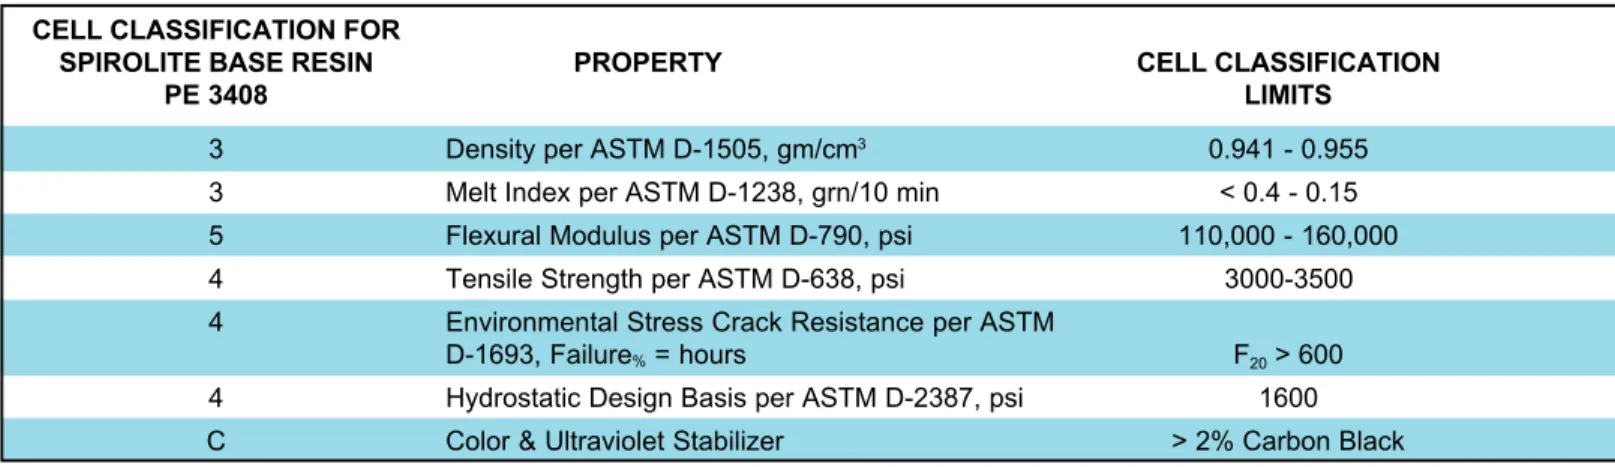 FIGURE 1: CELL CLASSIFICATION DESCRIPTIONS PER ASTM D-3350*